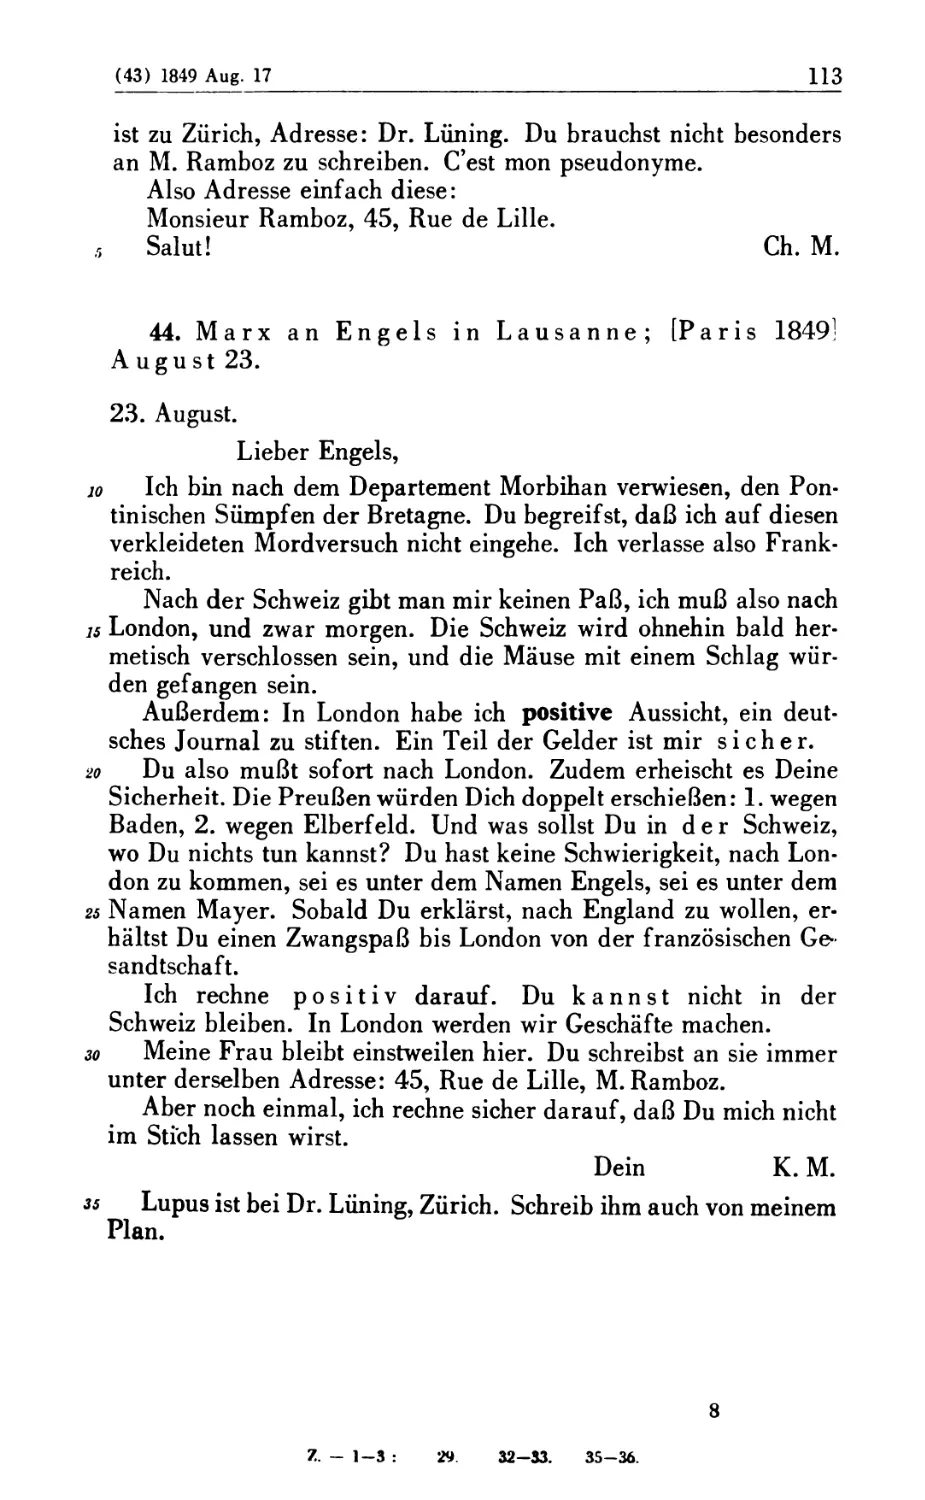 44. Marx an Engels in Lausanne; [Paris 1849] August 23